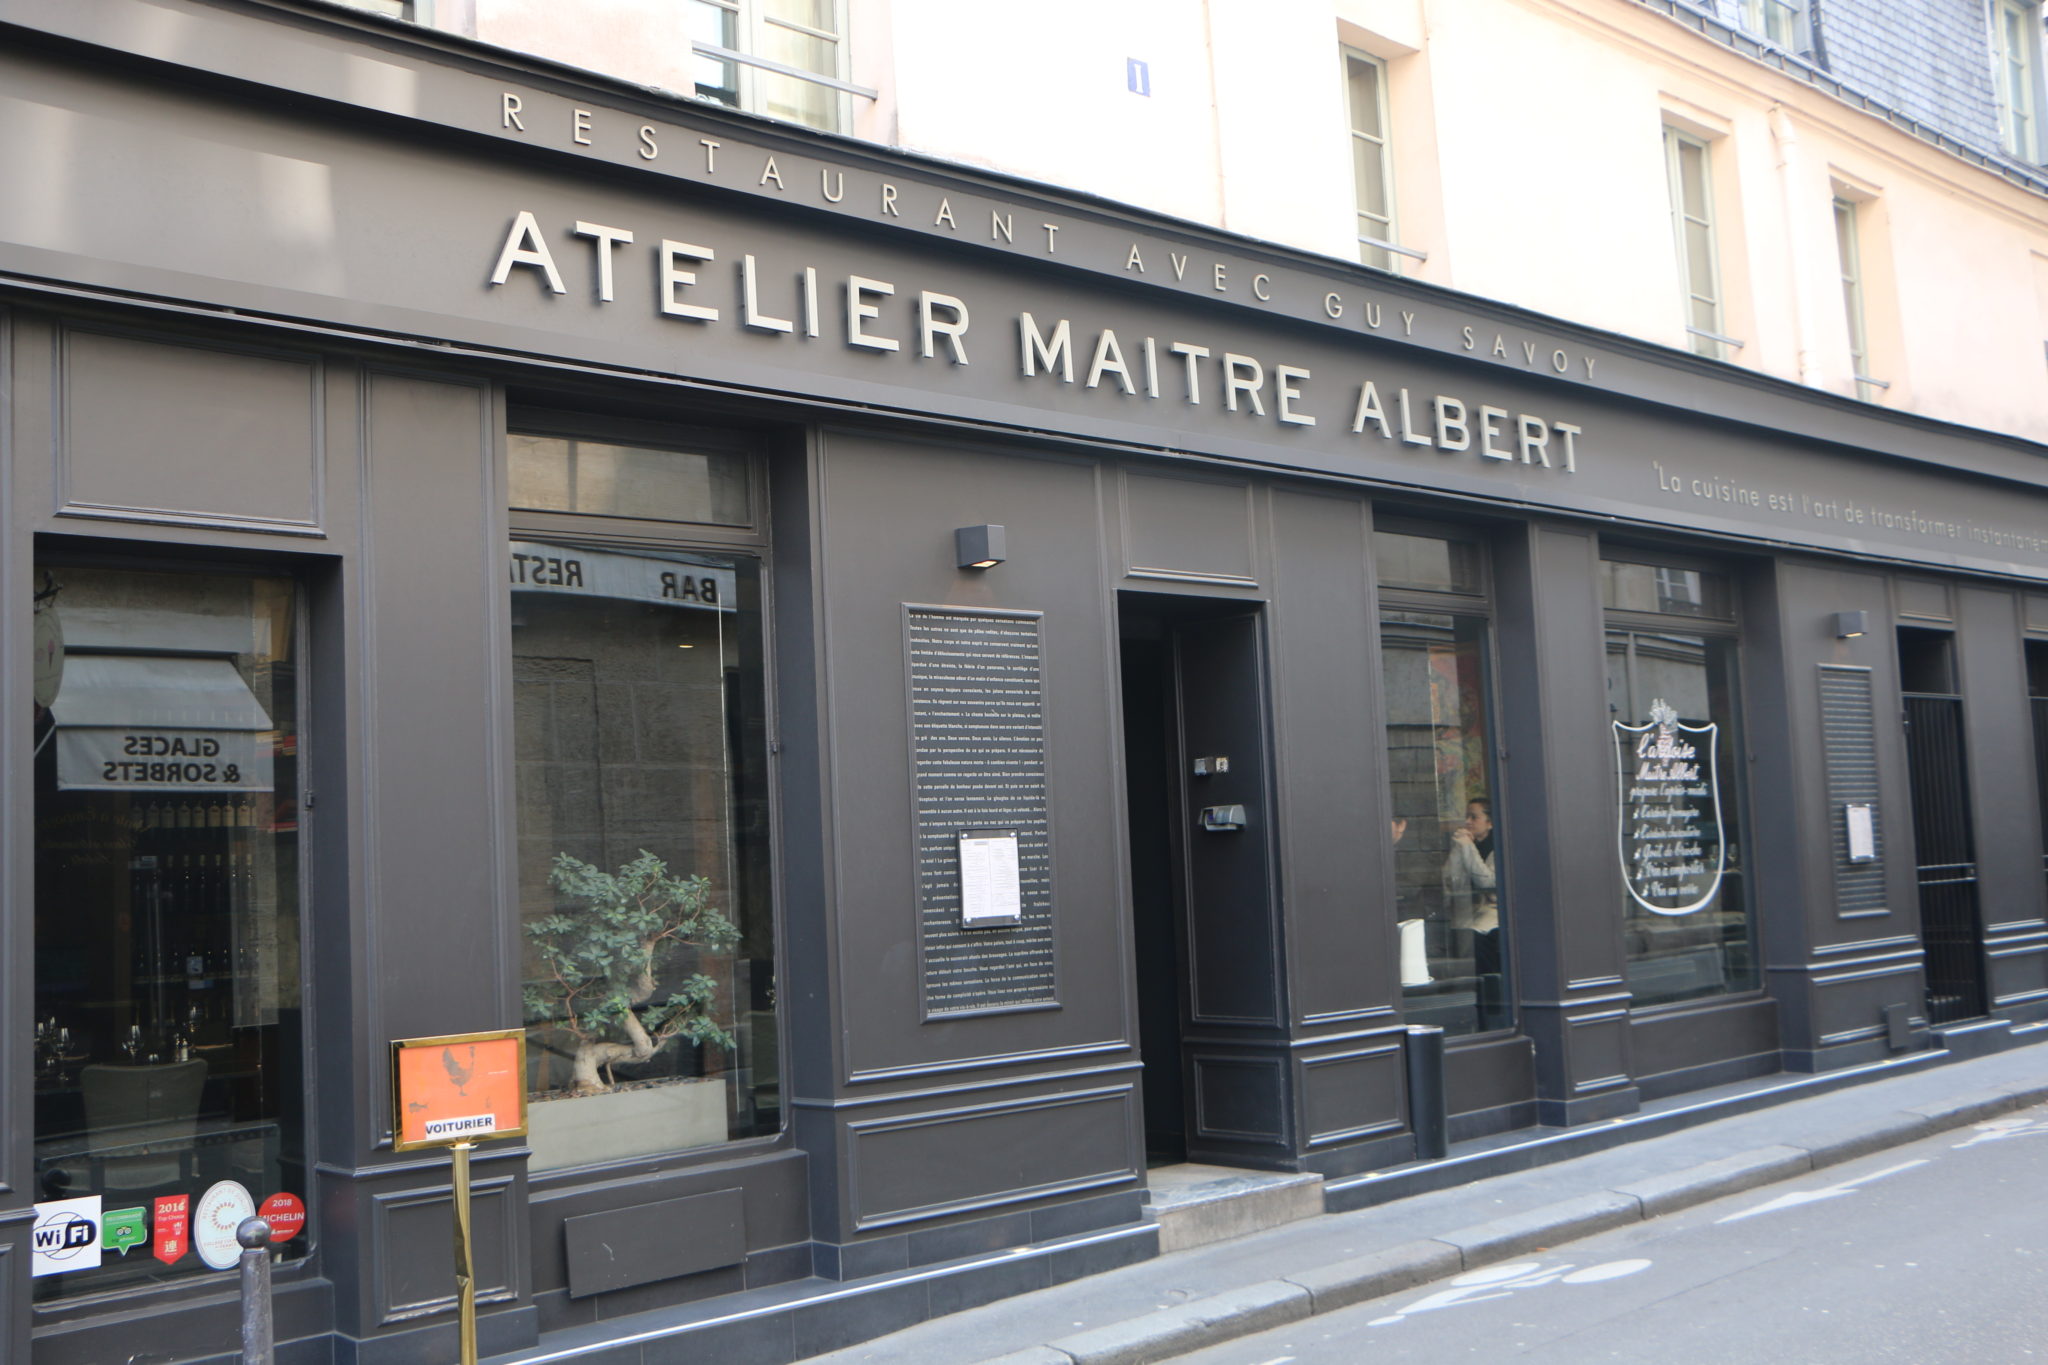 Atelier Maitre Albert - A Guy Savoy restaurant - Agent luxe blog